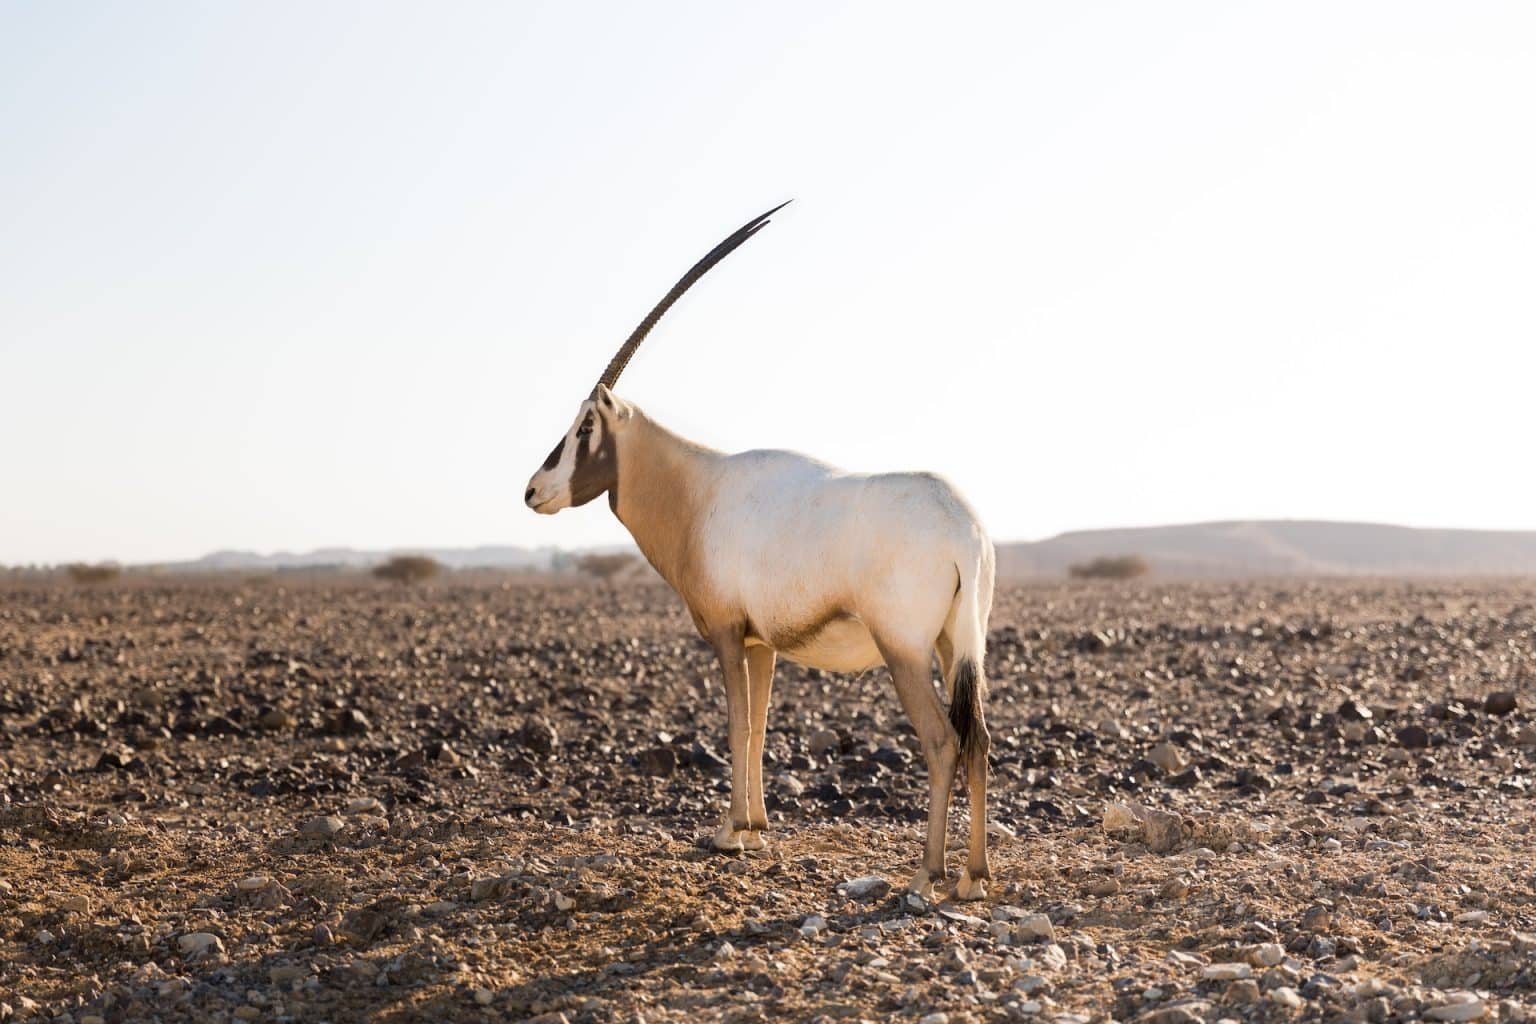 An oryx in the Arava, Israel